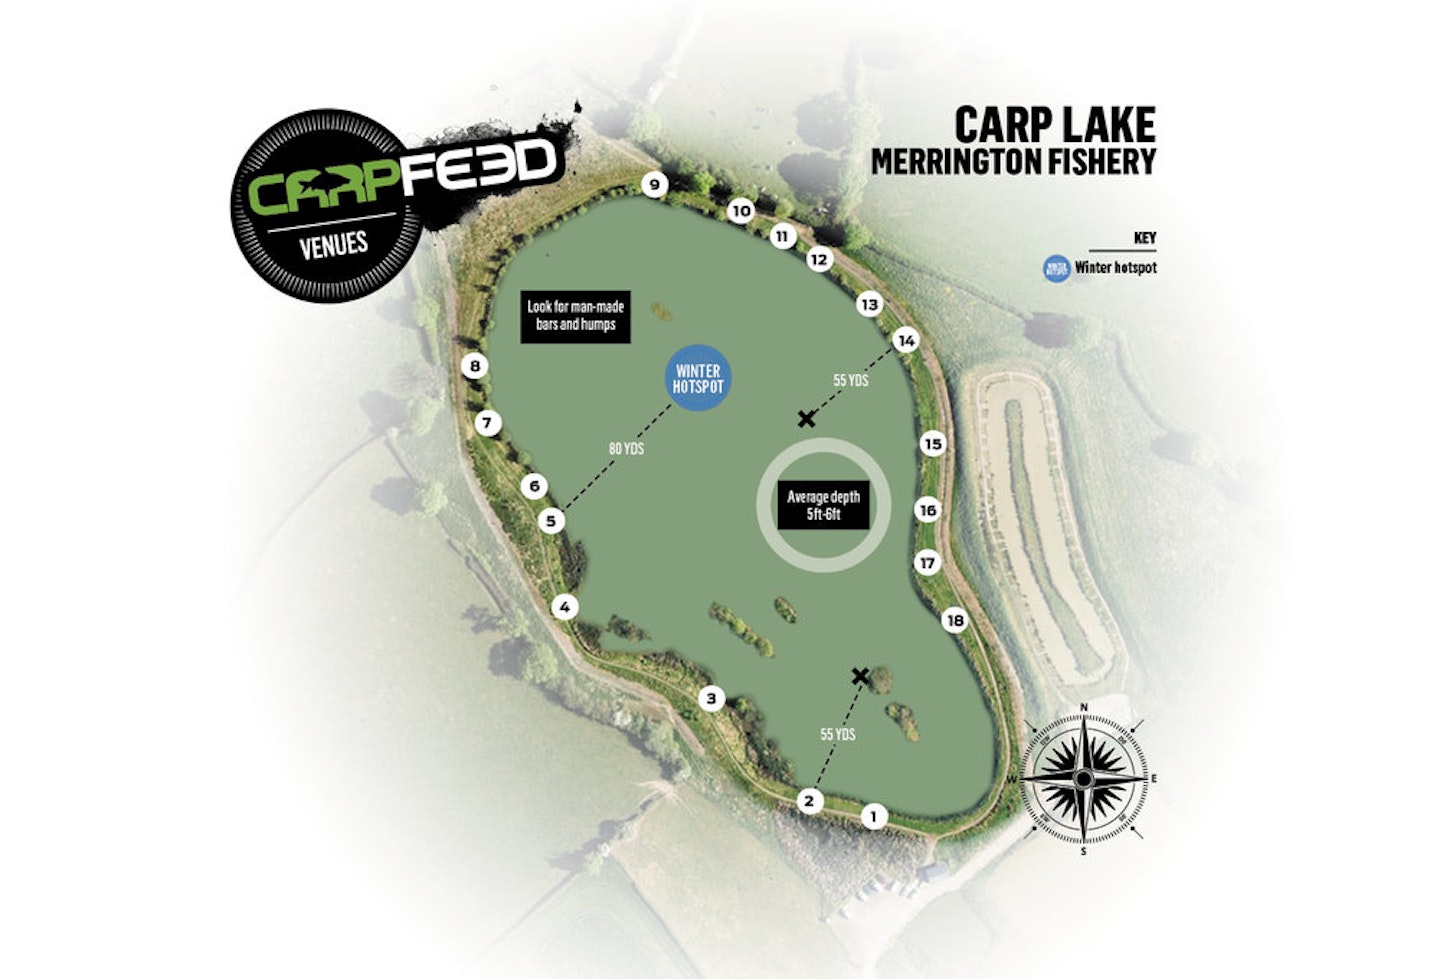 Merrington Carp Lake Map